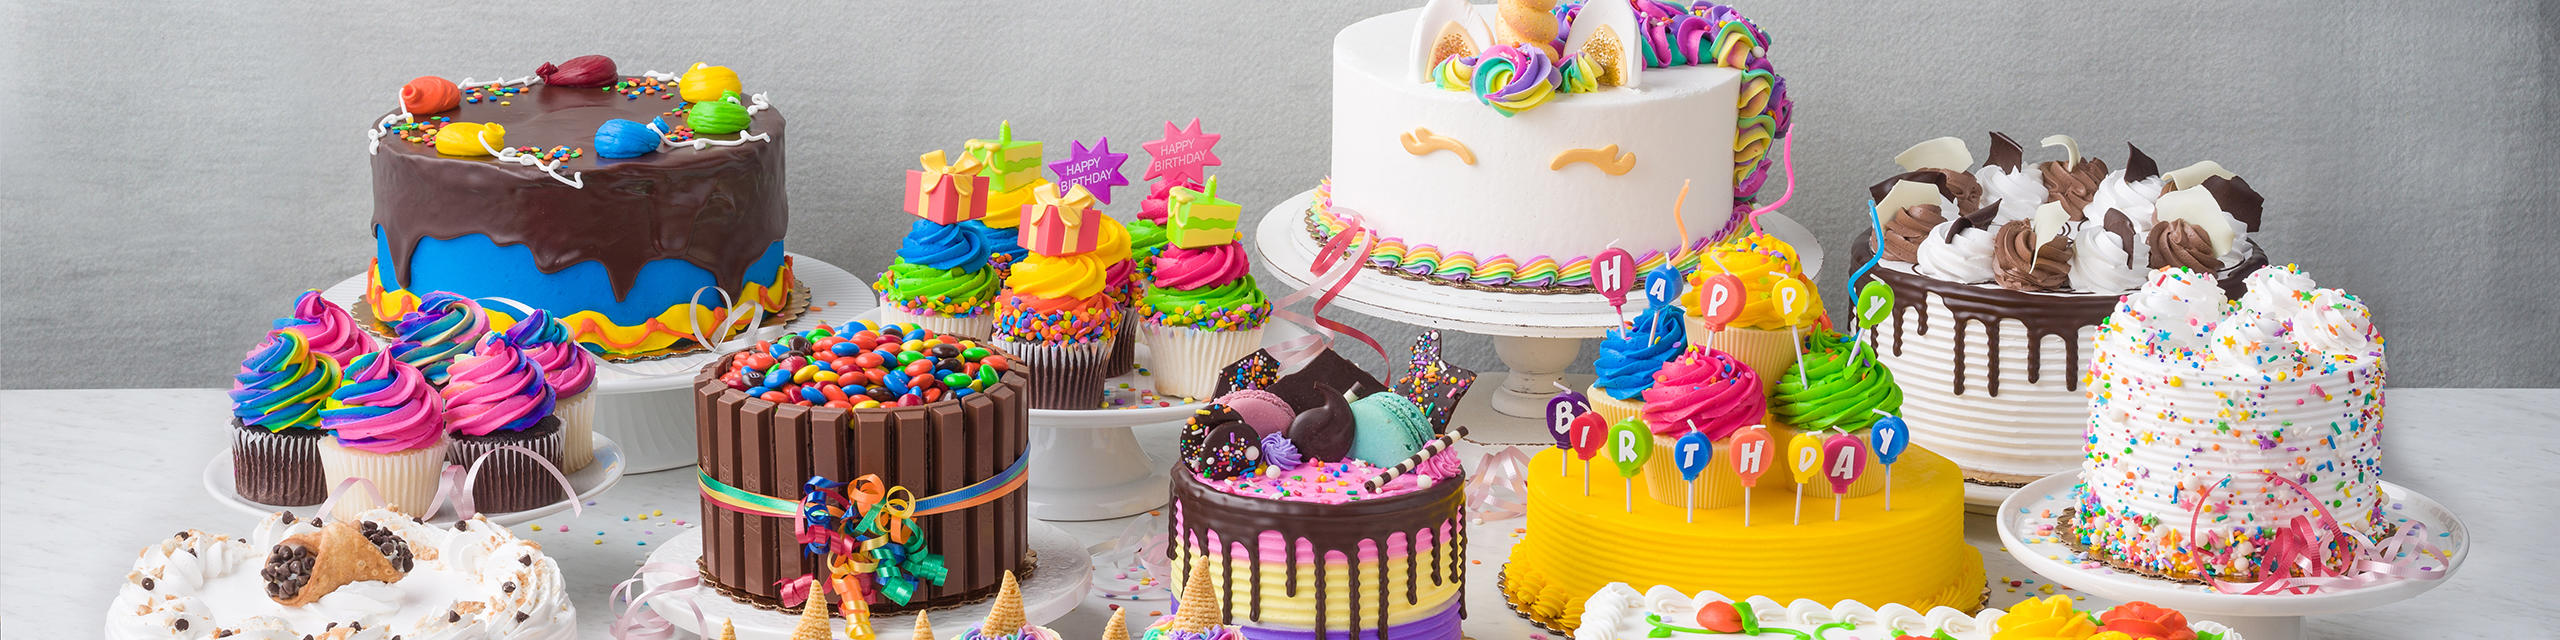 safeway #cake #birthday #birthdaycake #cakes #cakevideo #fyp | TikTok